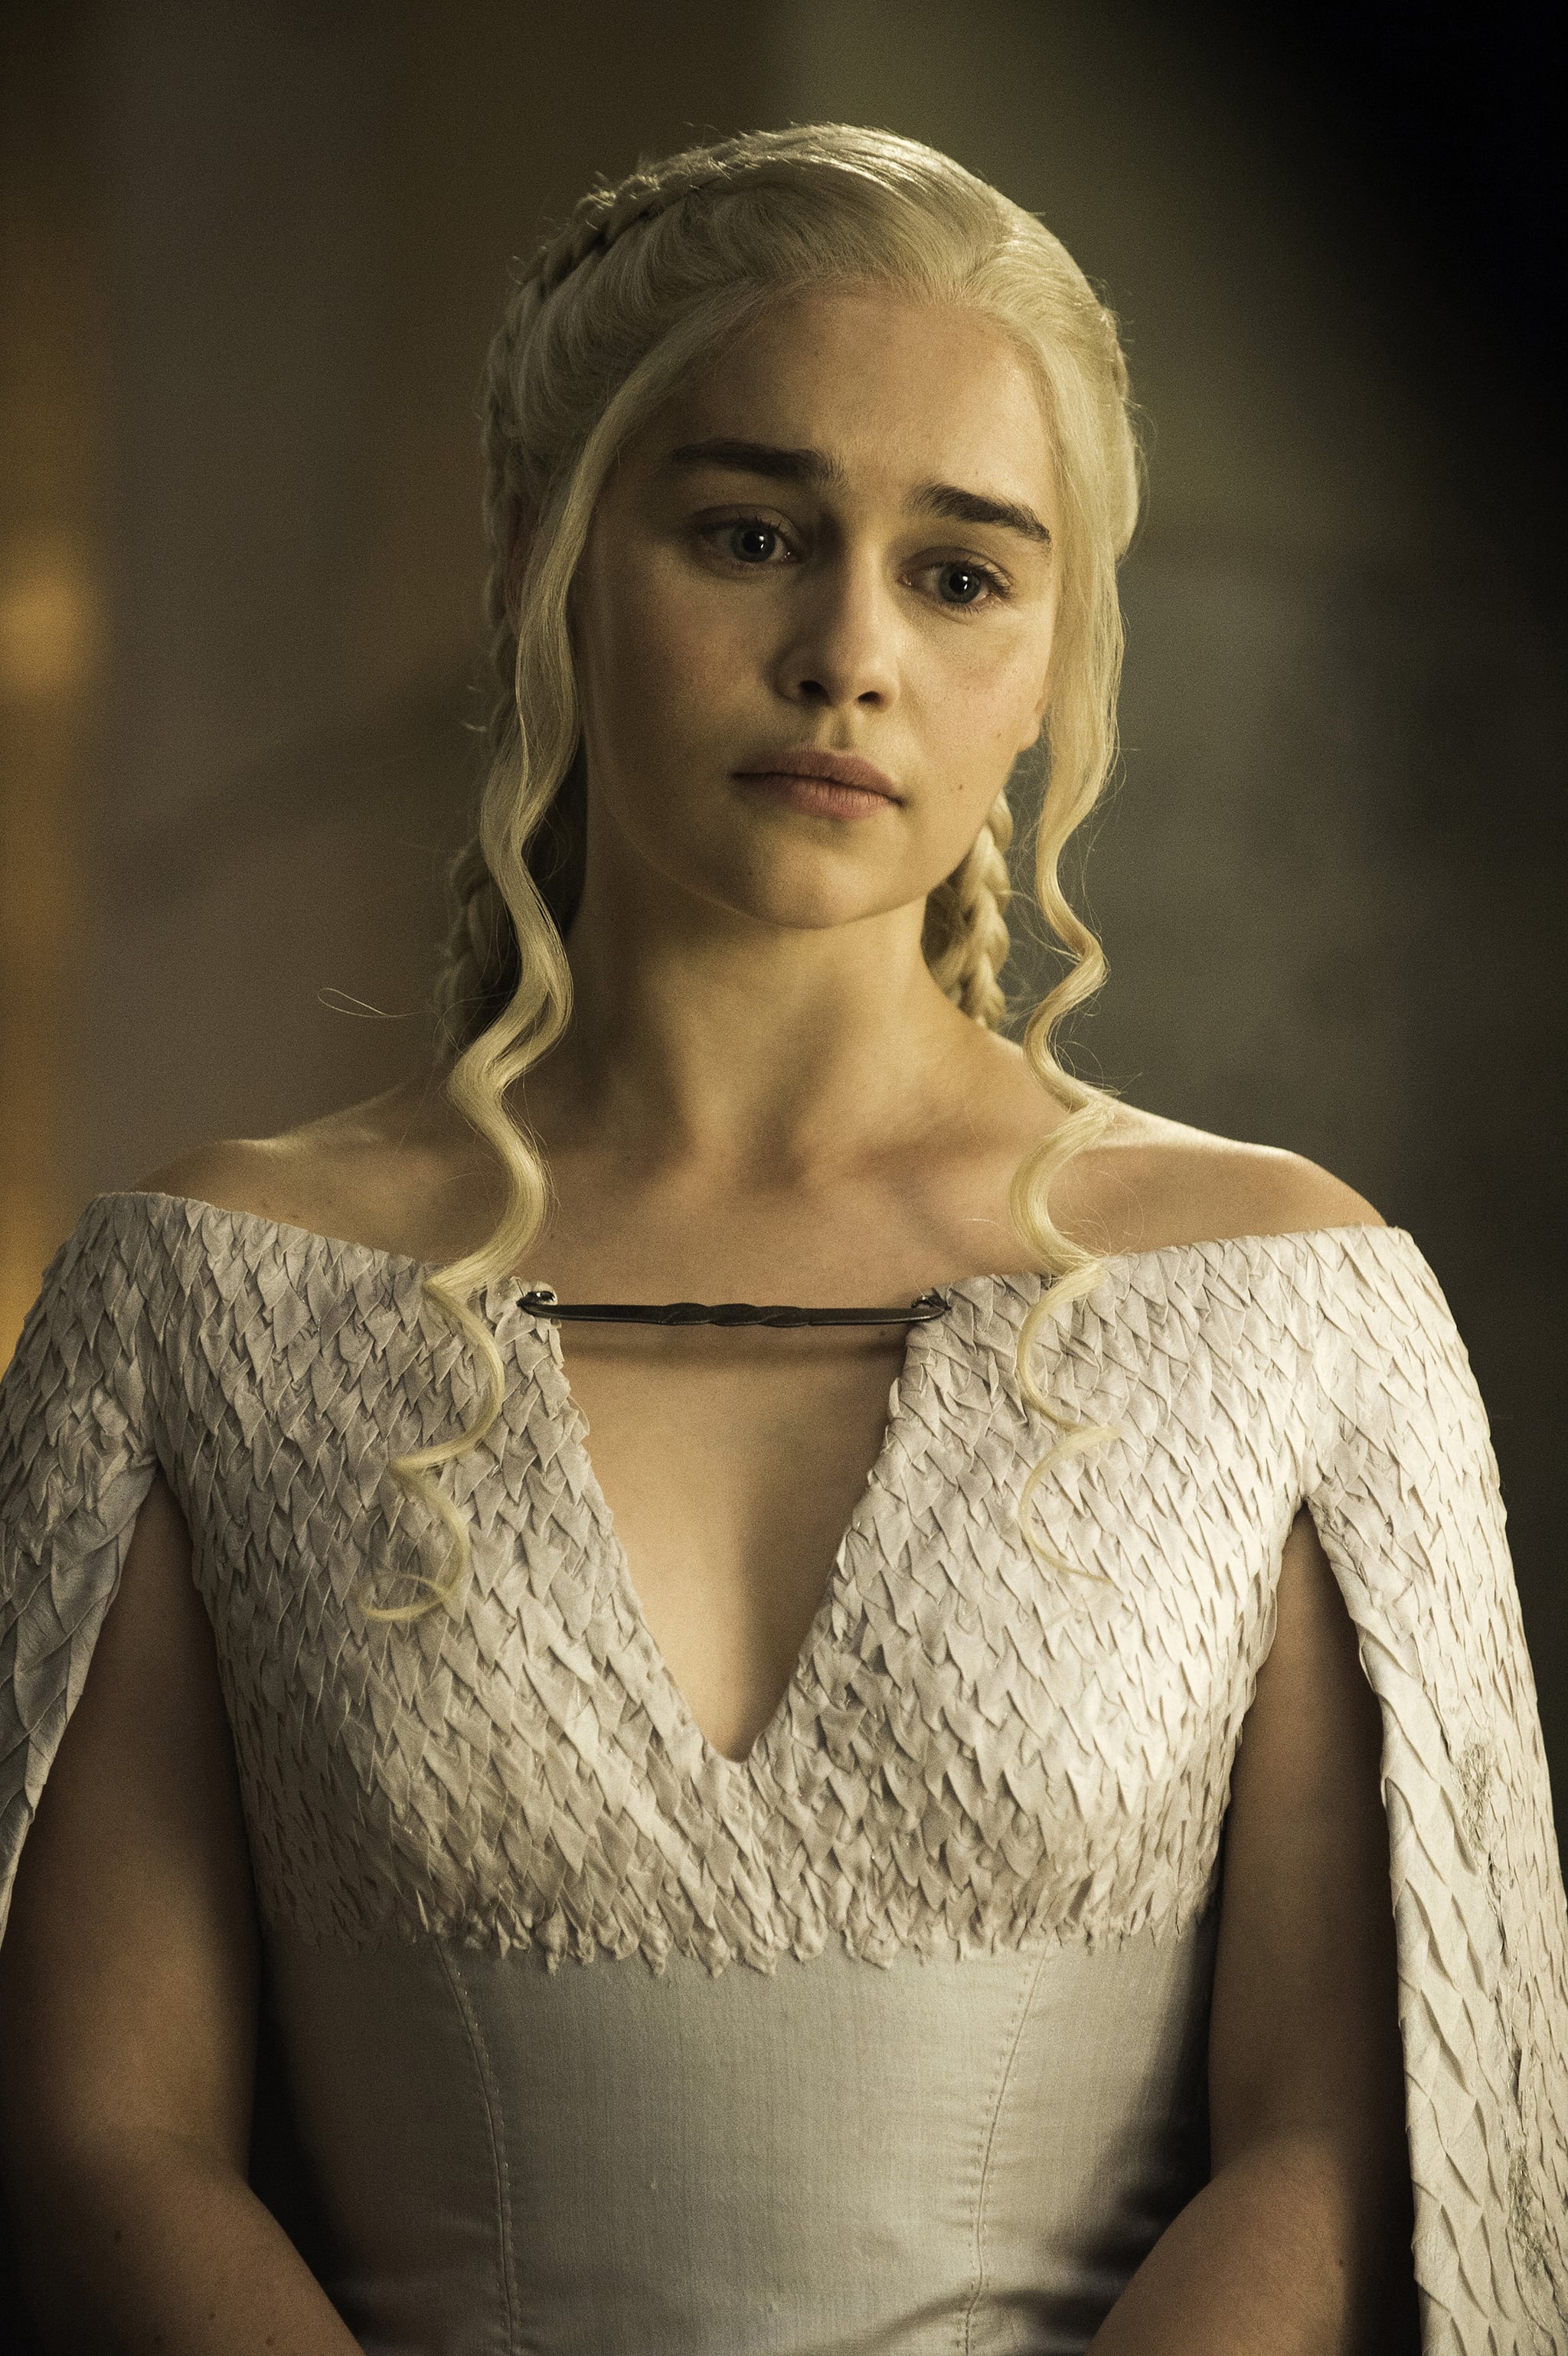 Daenerys Targaryen Played by Emilia Clarke Age Investigation: How